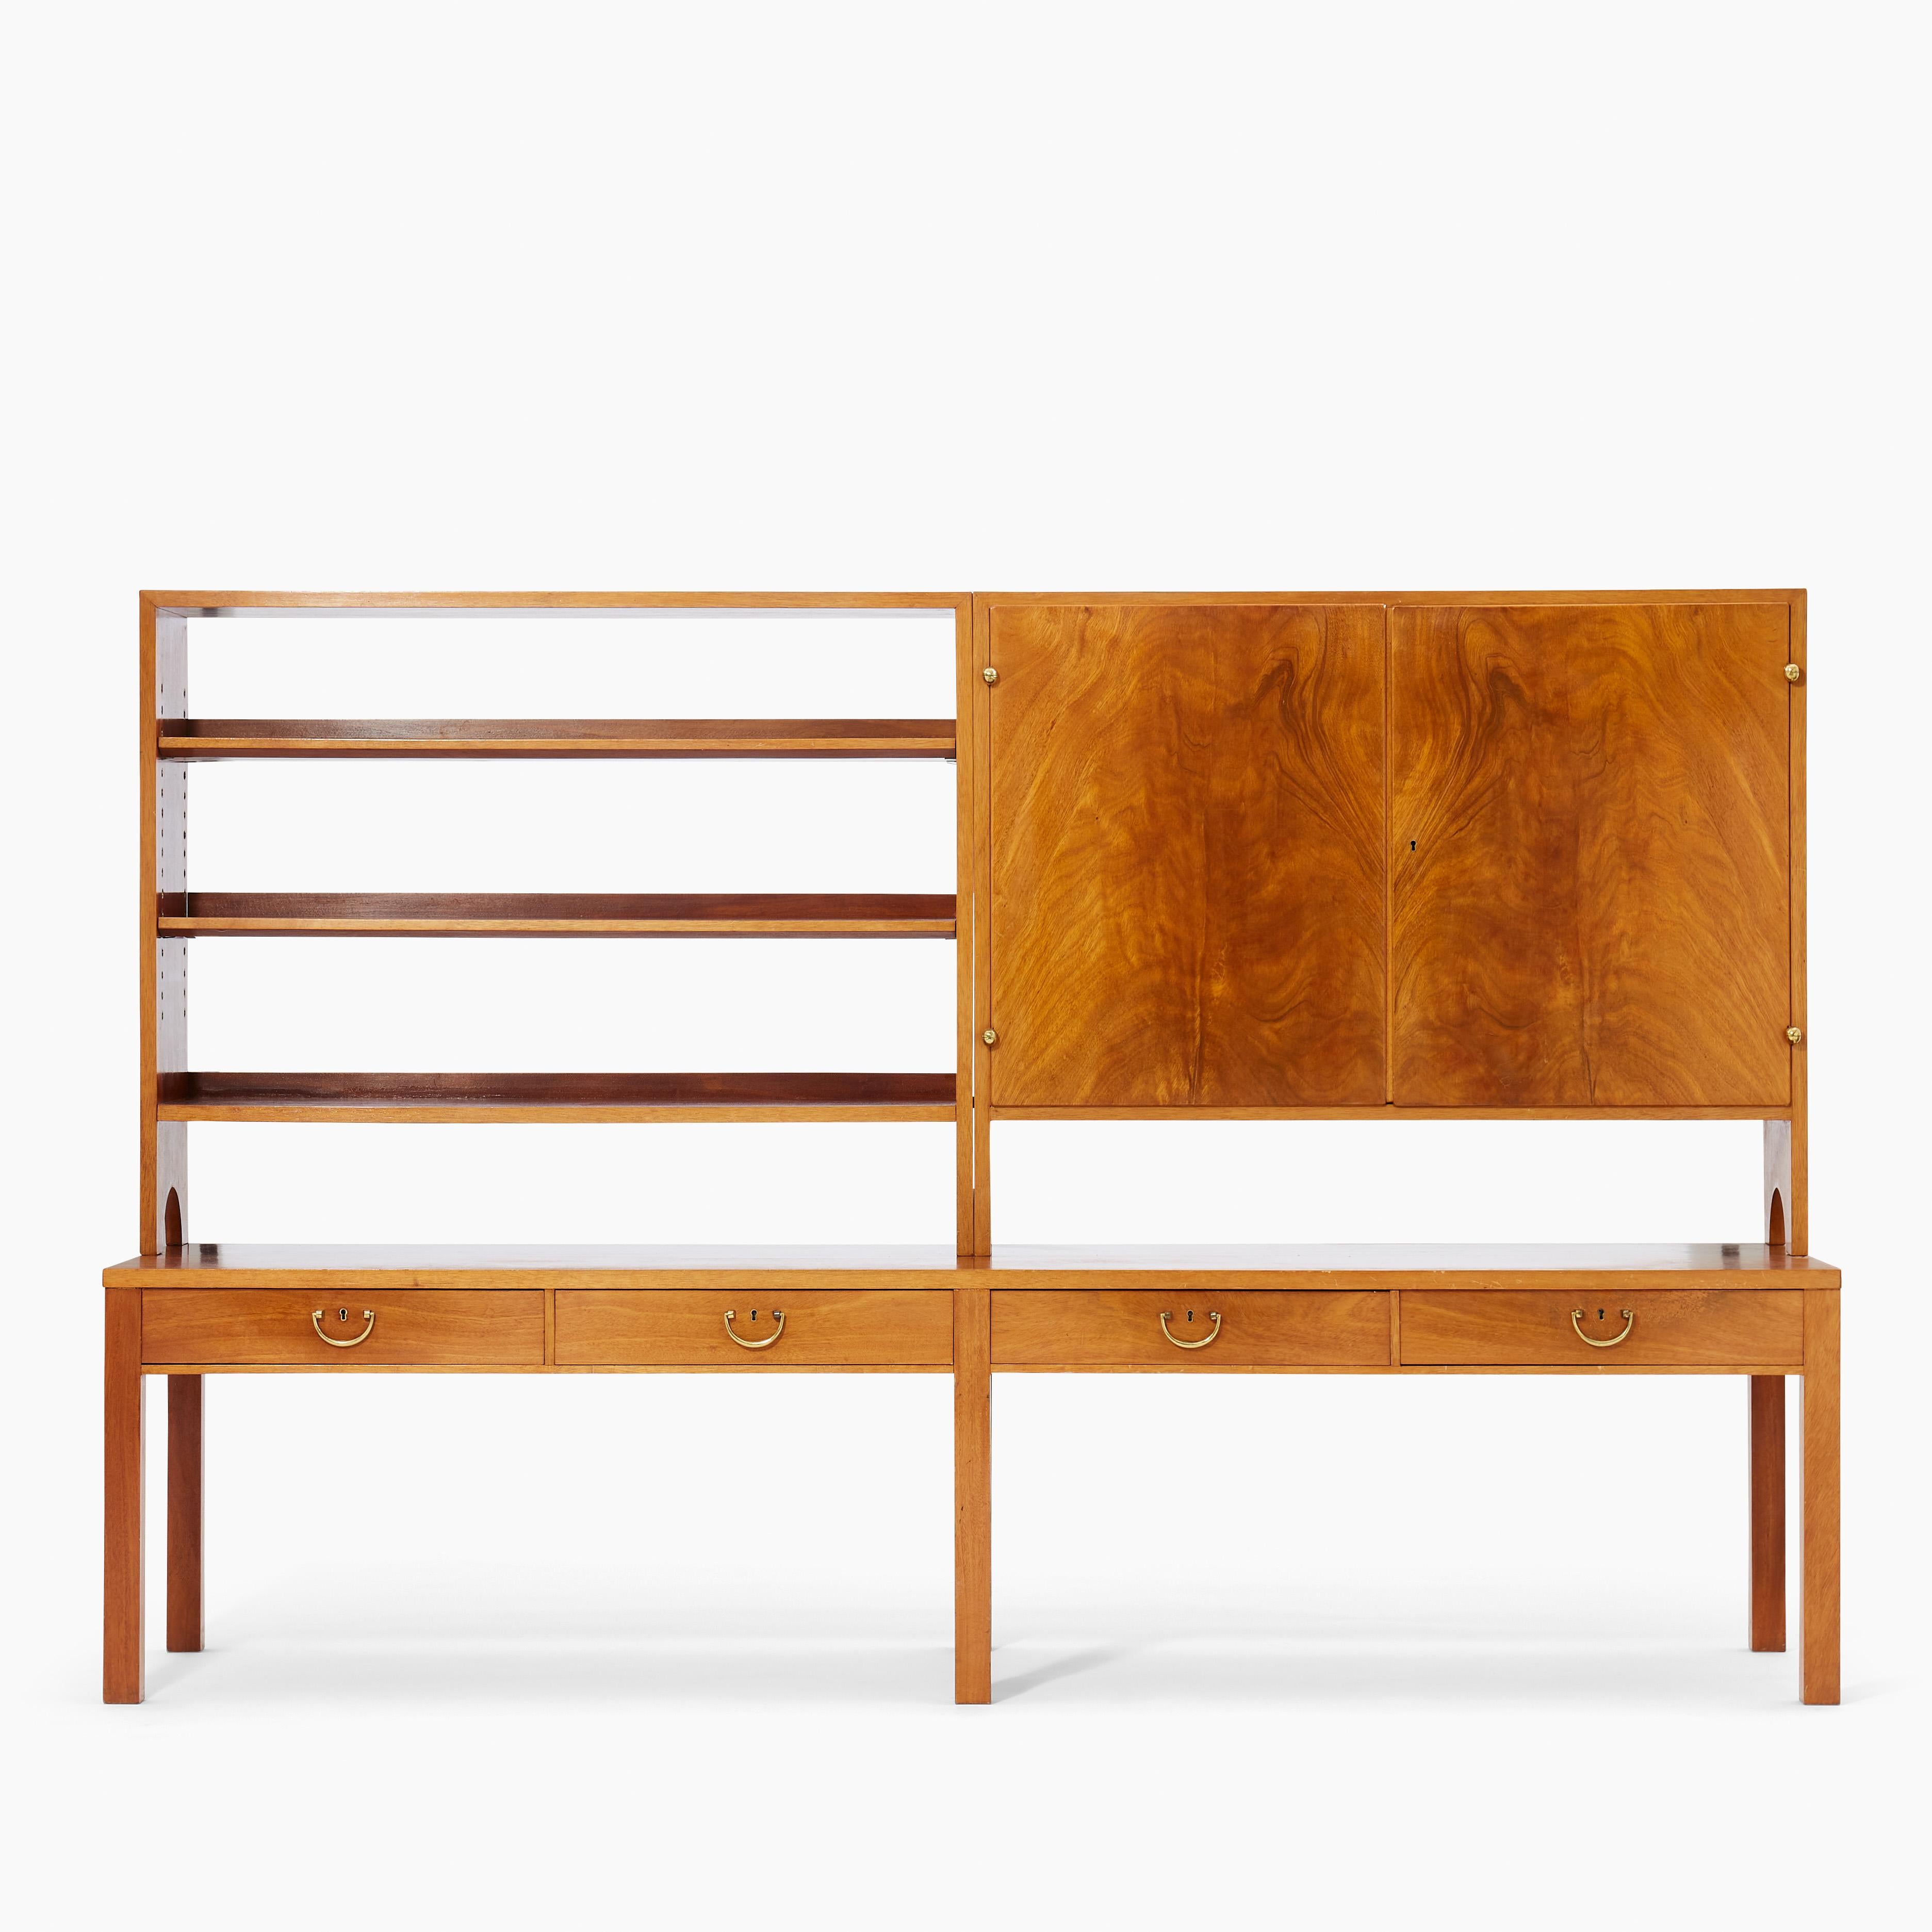 Rare, Josef Frank (1885-1967). Bookshelf. Model number 1142. Company Svenskt Tenn 1950s. Veneered in mahogany. Measures: L 200, W 50, H 130 cm.